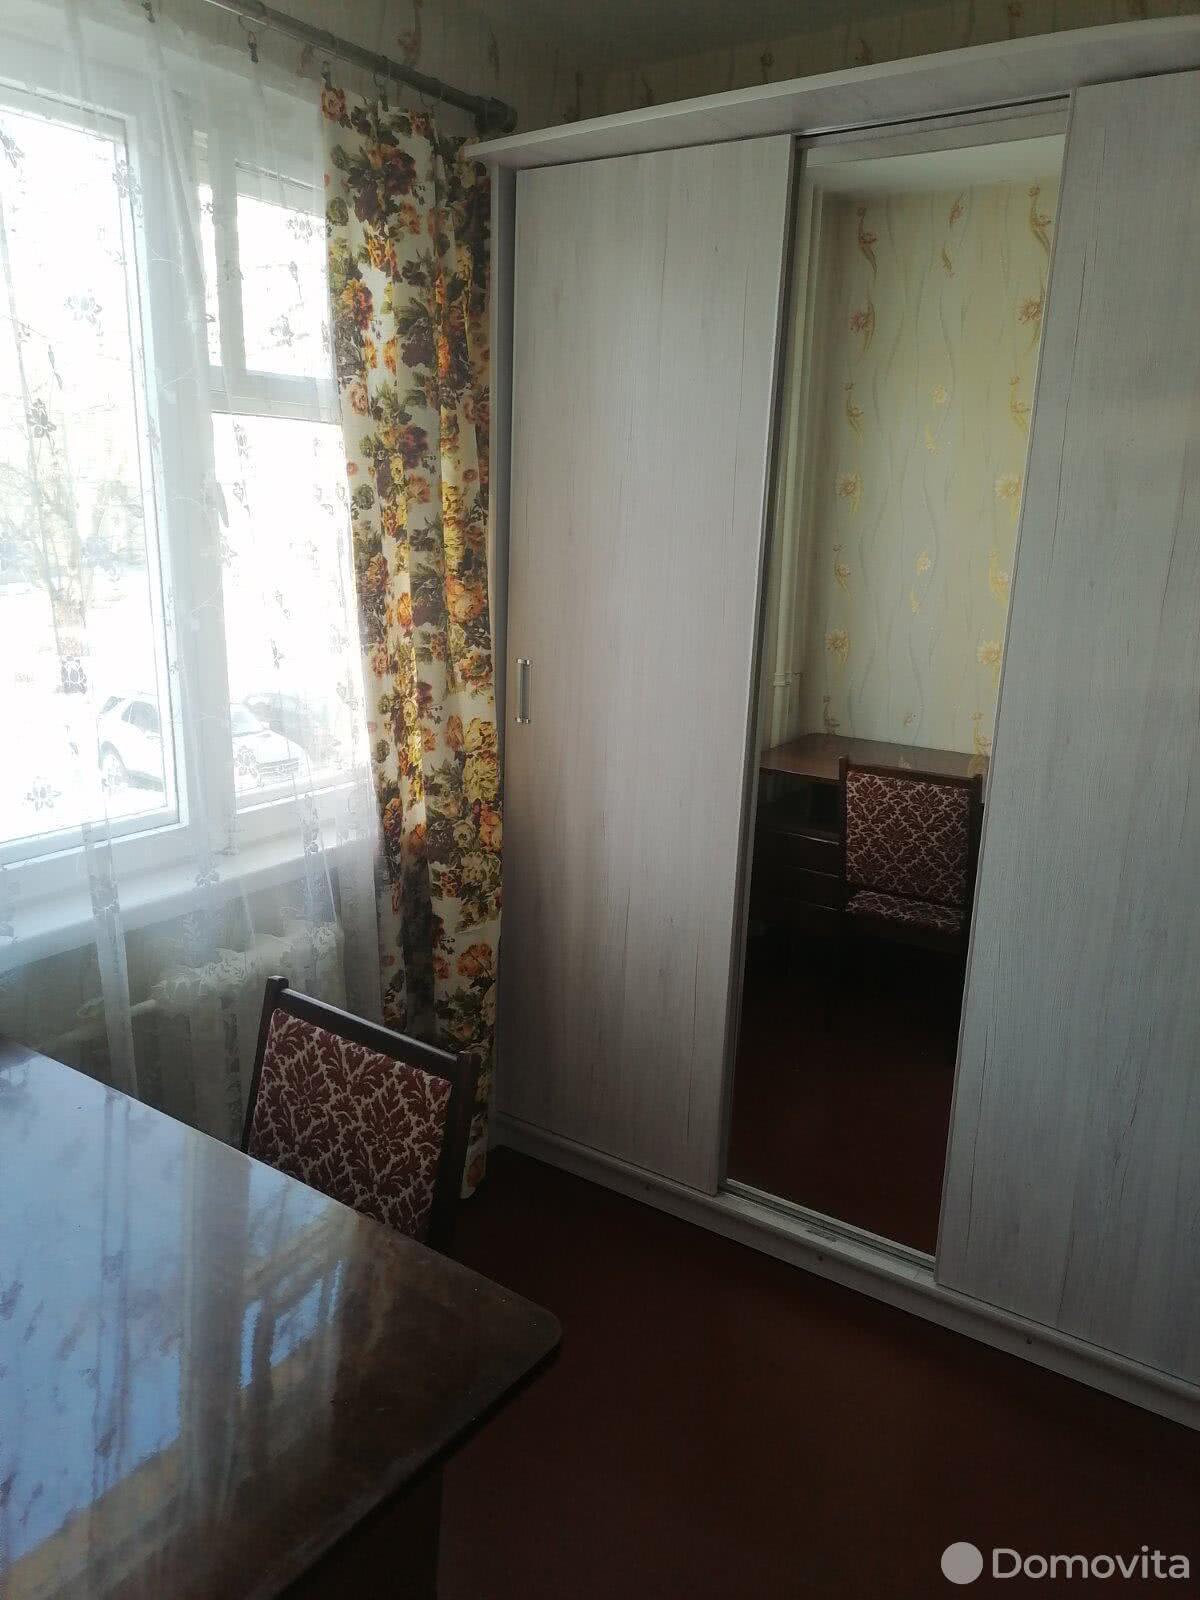 квартира, Минск, пр-т Пушкина, д. 59, стоимость аренды 814 р./мес.